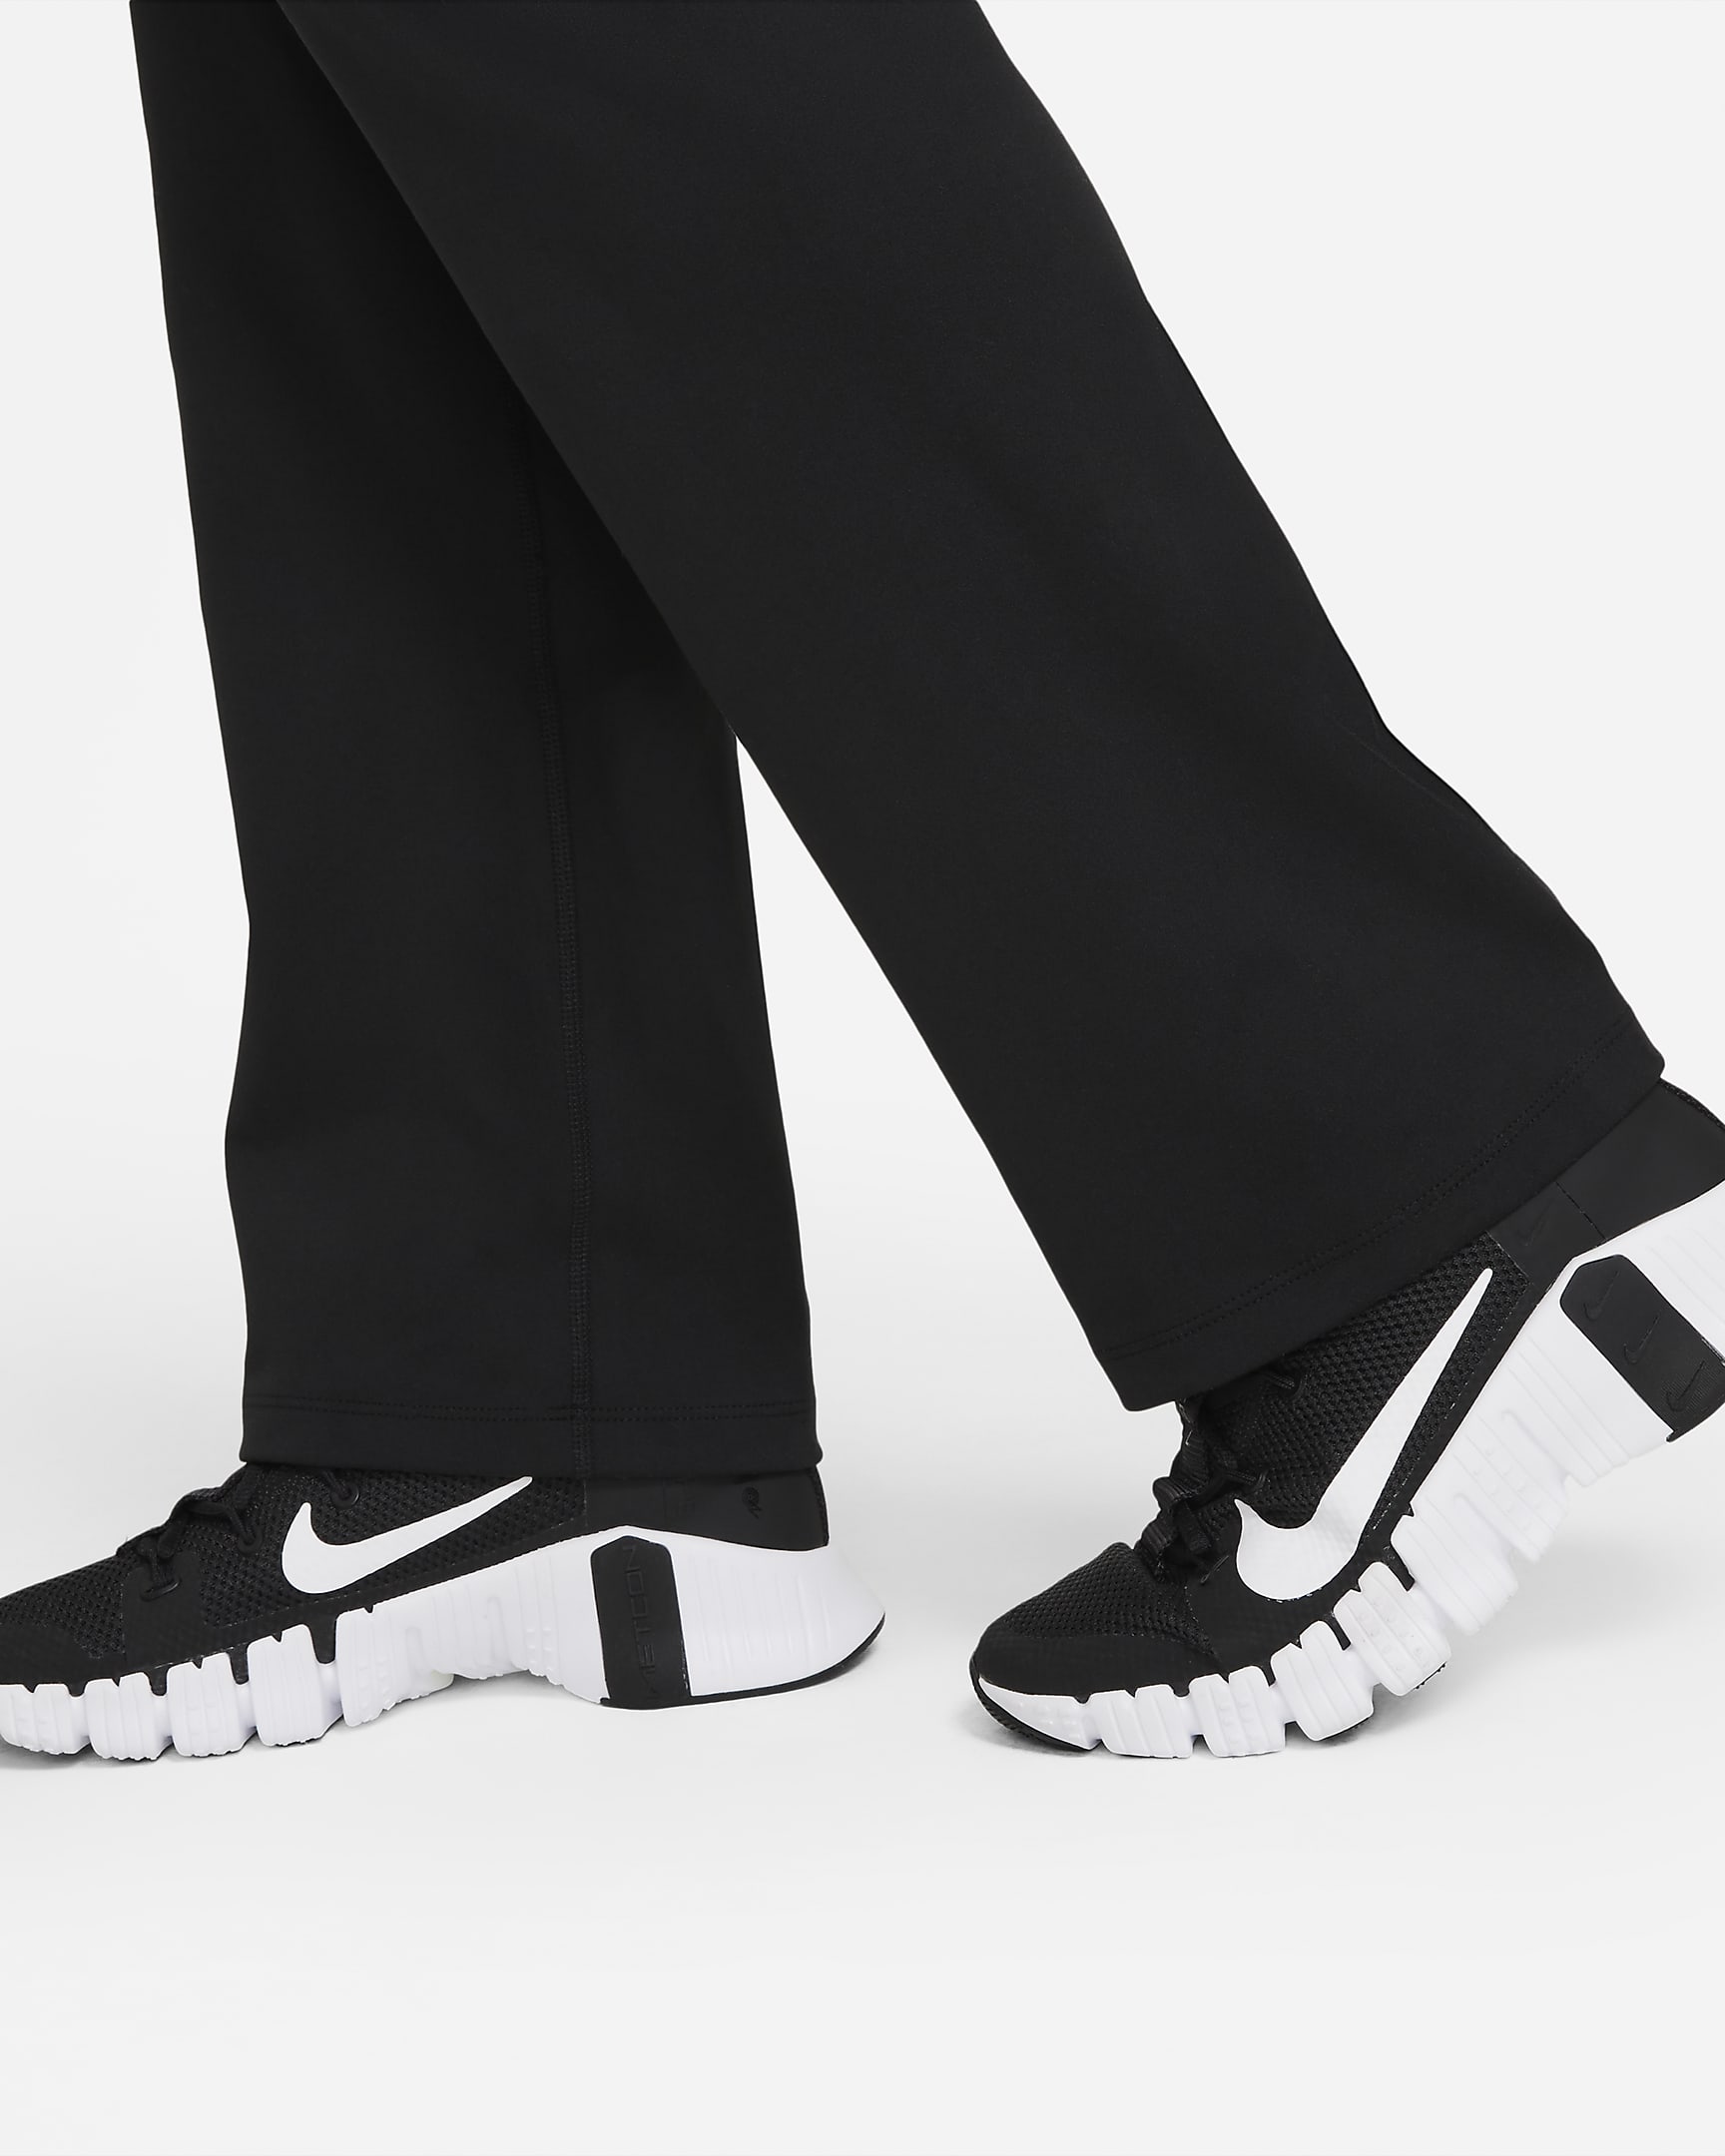 Nike Power Women's Training Trousers - Black/Black